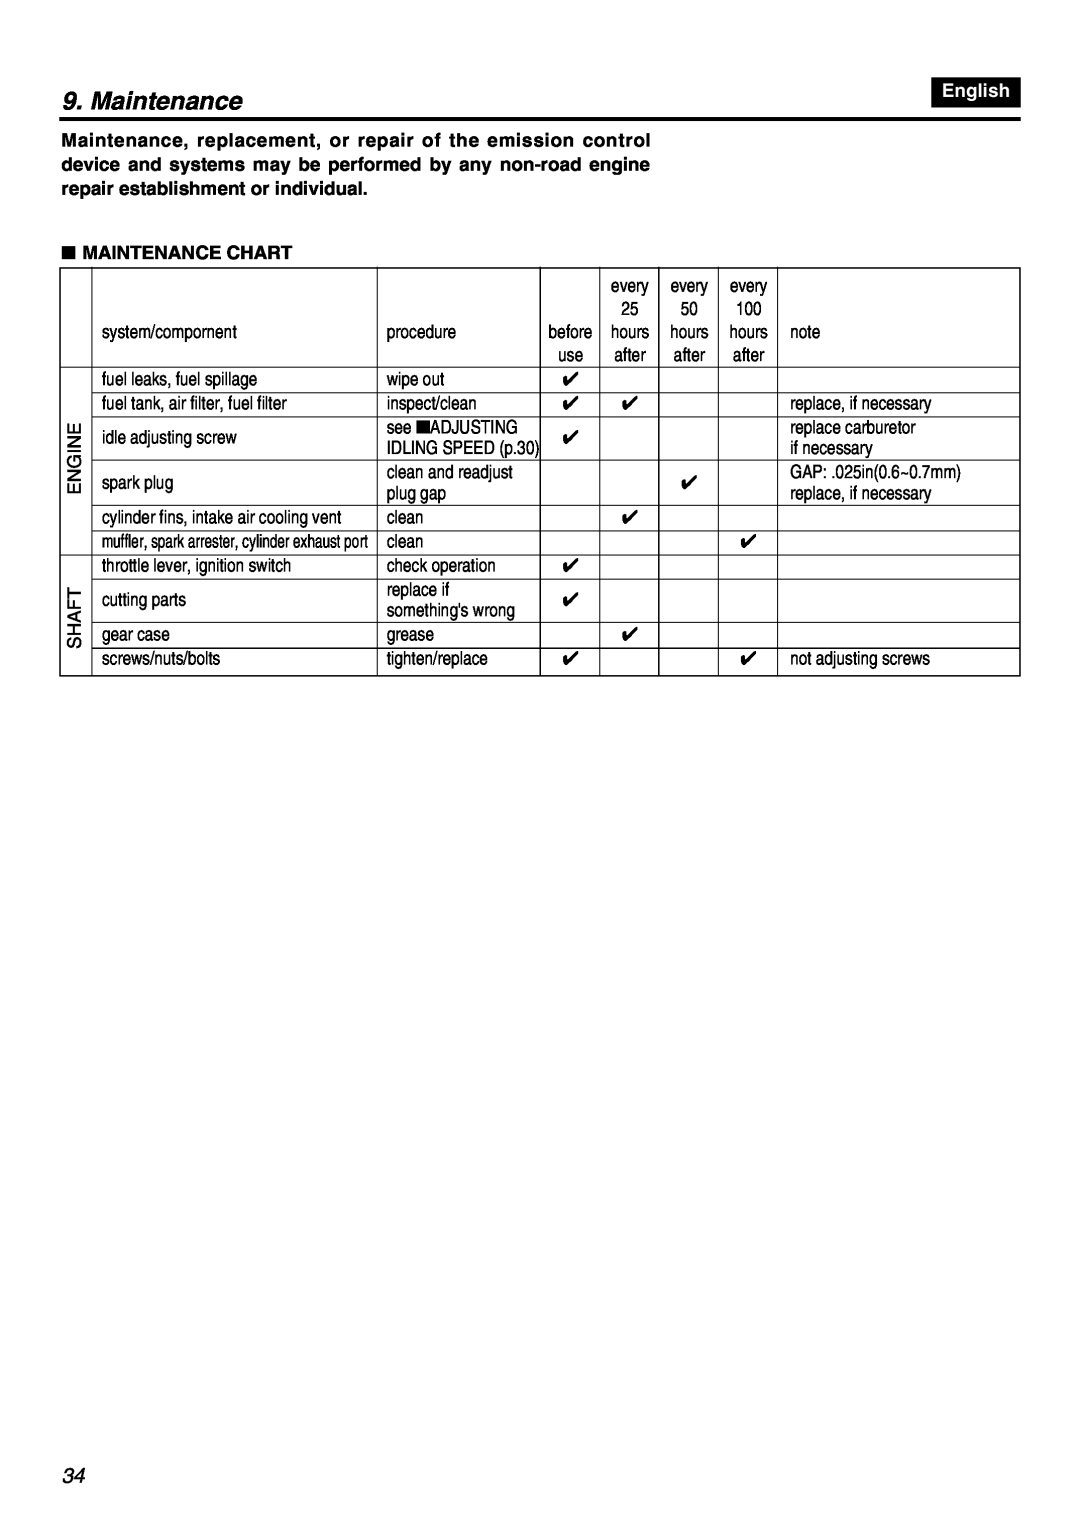 RedMax SRTZ2401F manual English, Maintenance Chart 